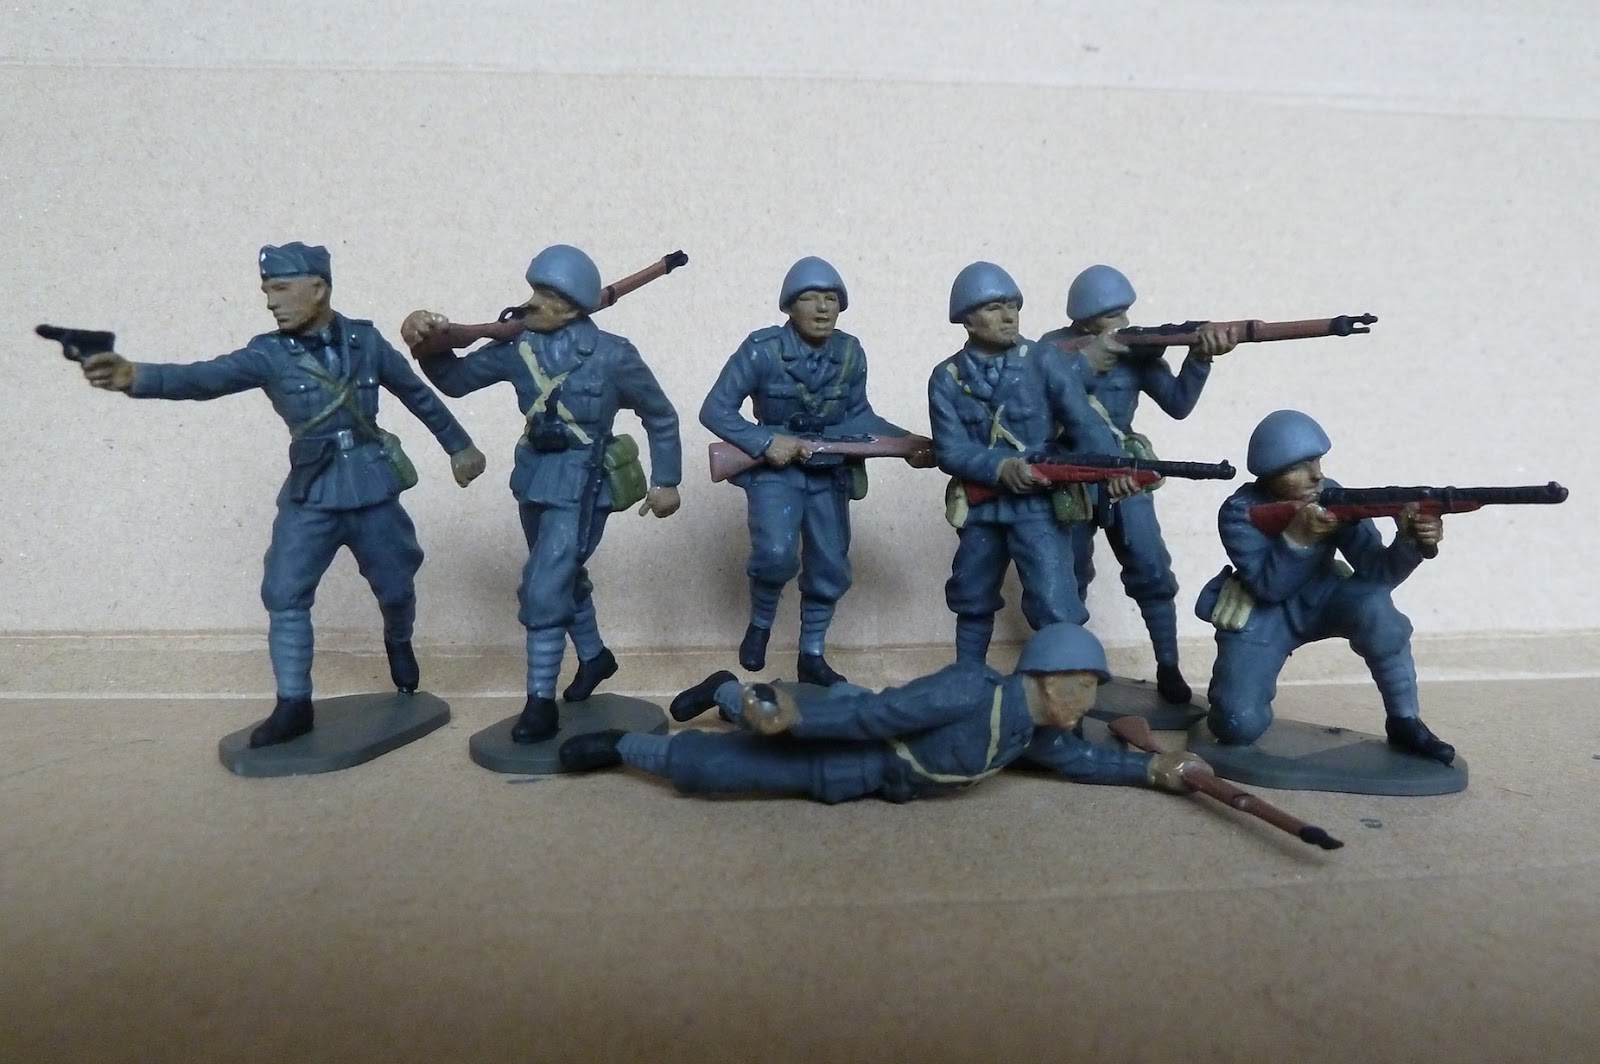 Новости 1 32. Airfix солдатики 1 32. Airfix Toy Soldiers 1/32 German Infantry. Солдатики 1 32 Фольксштурм WWII. Airfix Soldiers 1/32 Italy.